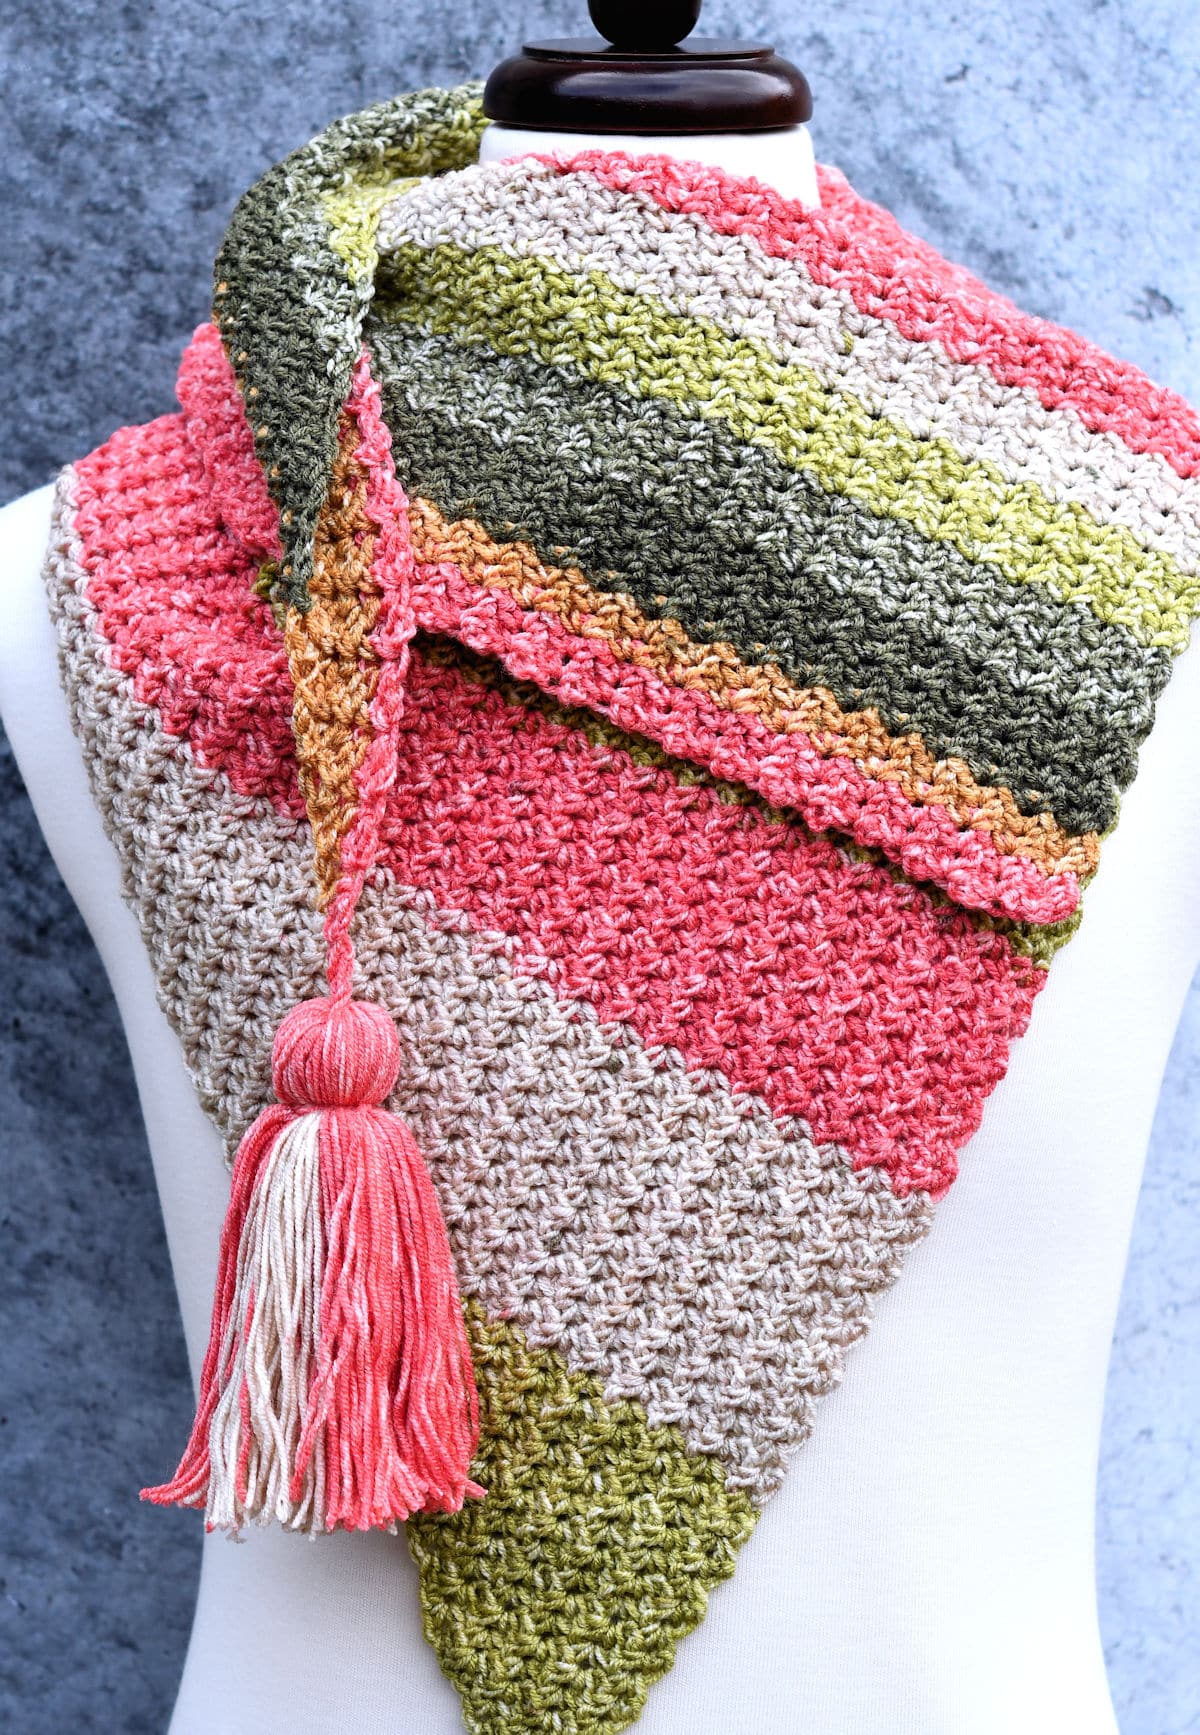 Make It Crochet: Crochet Triangle Shawl | The Right Wrap by Kim Guzman